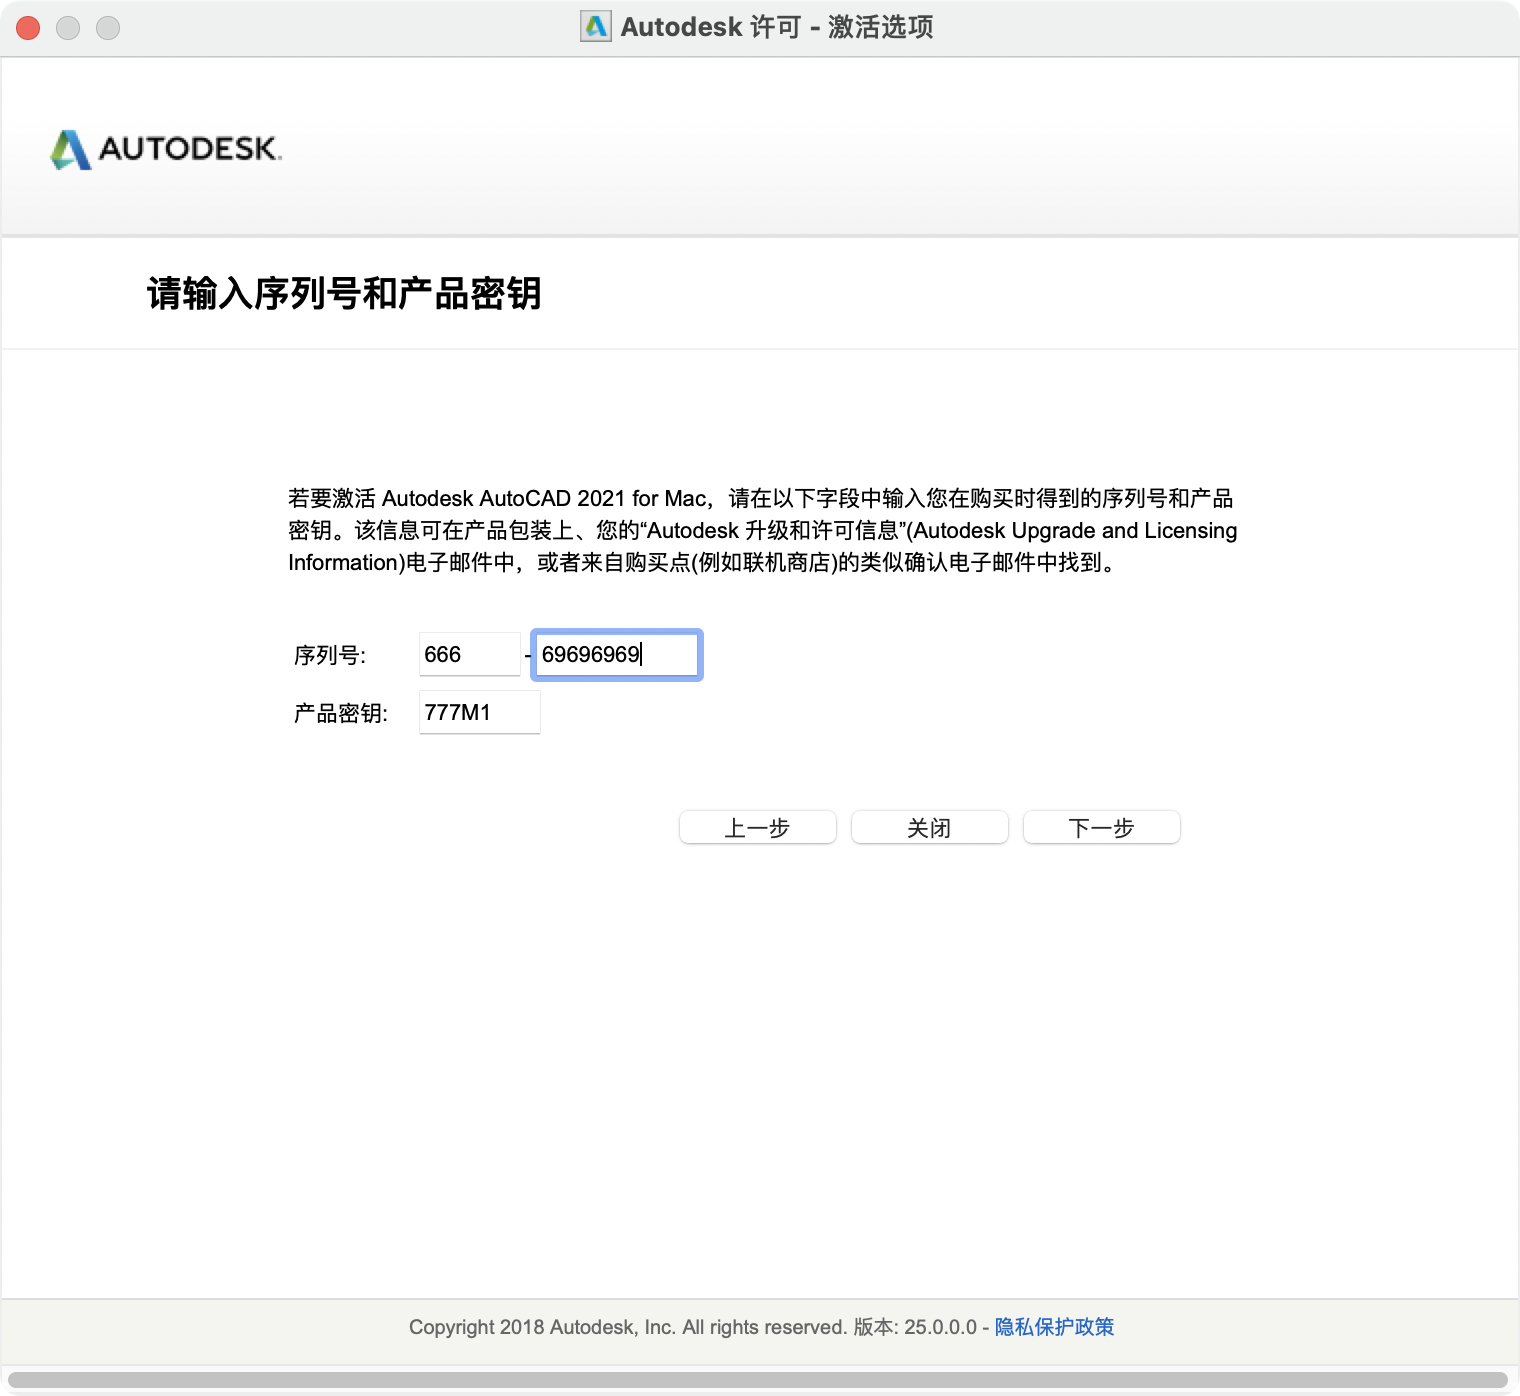 Autodesk AutoCAD 2021.1 For Mac 三维设计软件中文破解版